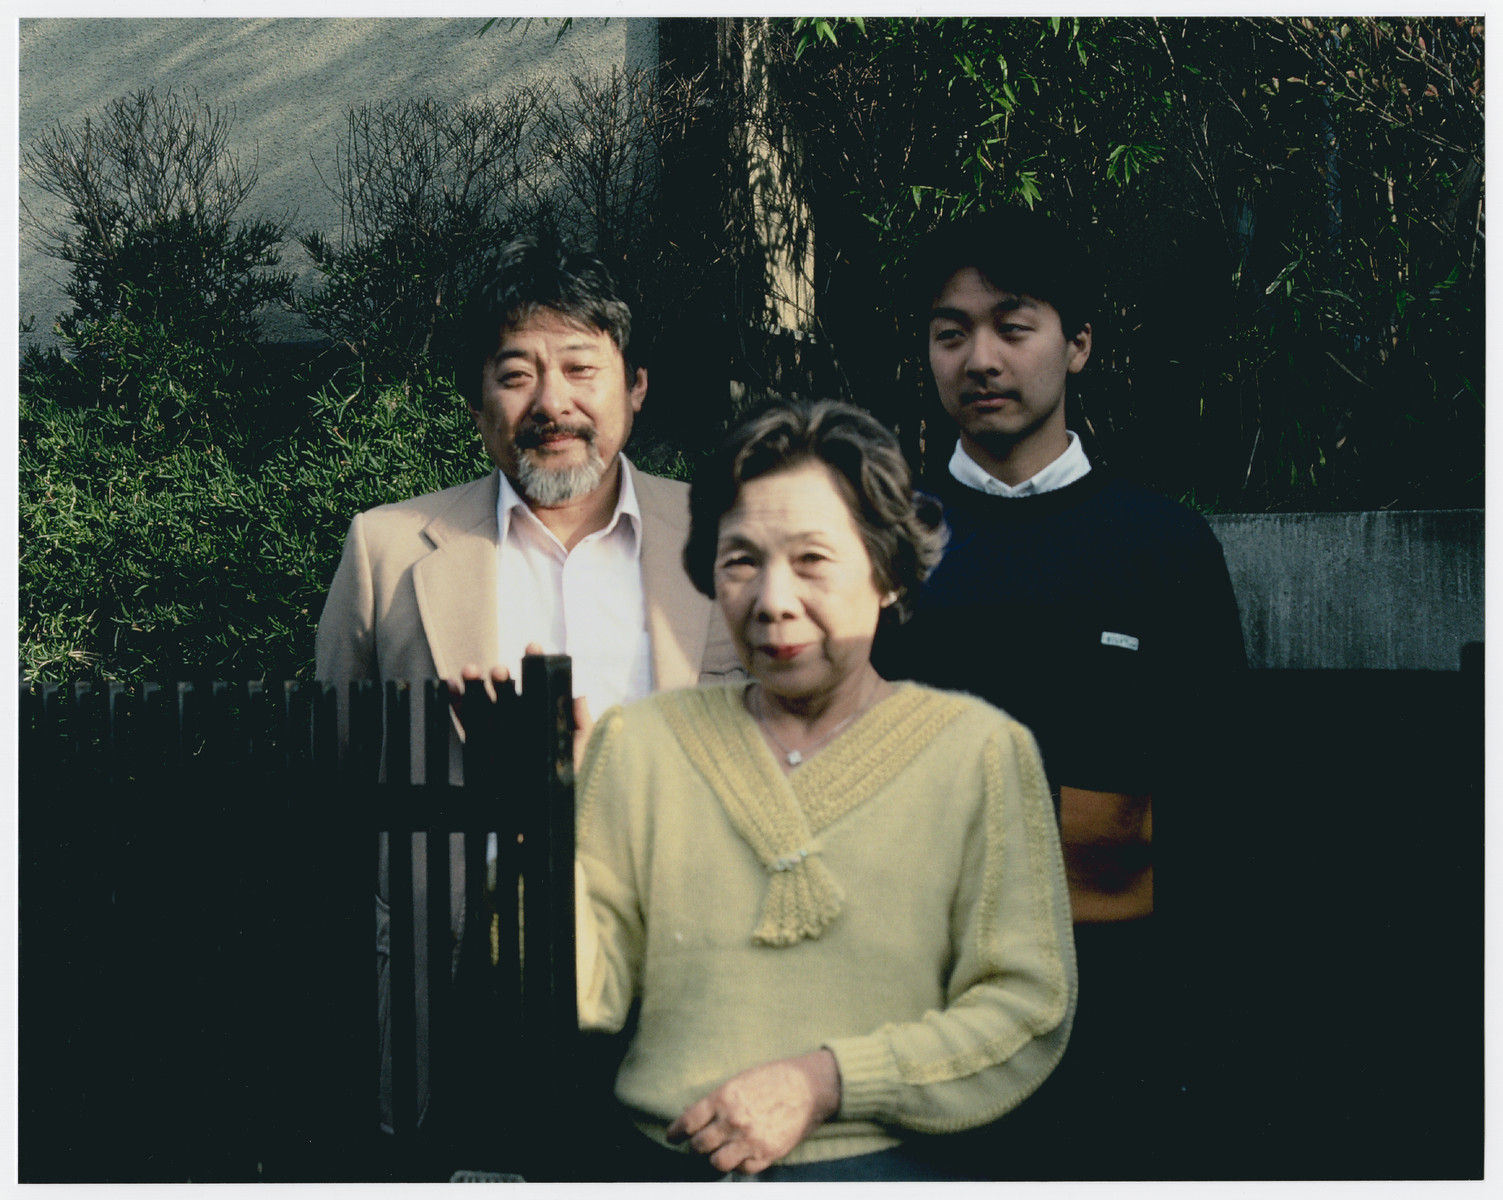 Yukiko Sugihara poses with her son Hiroki and grandson,